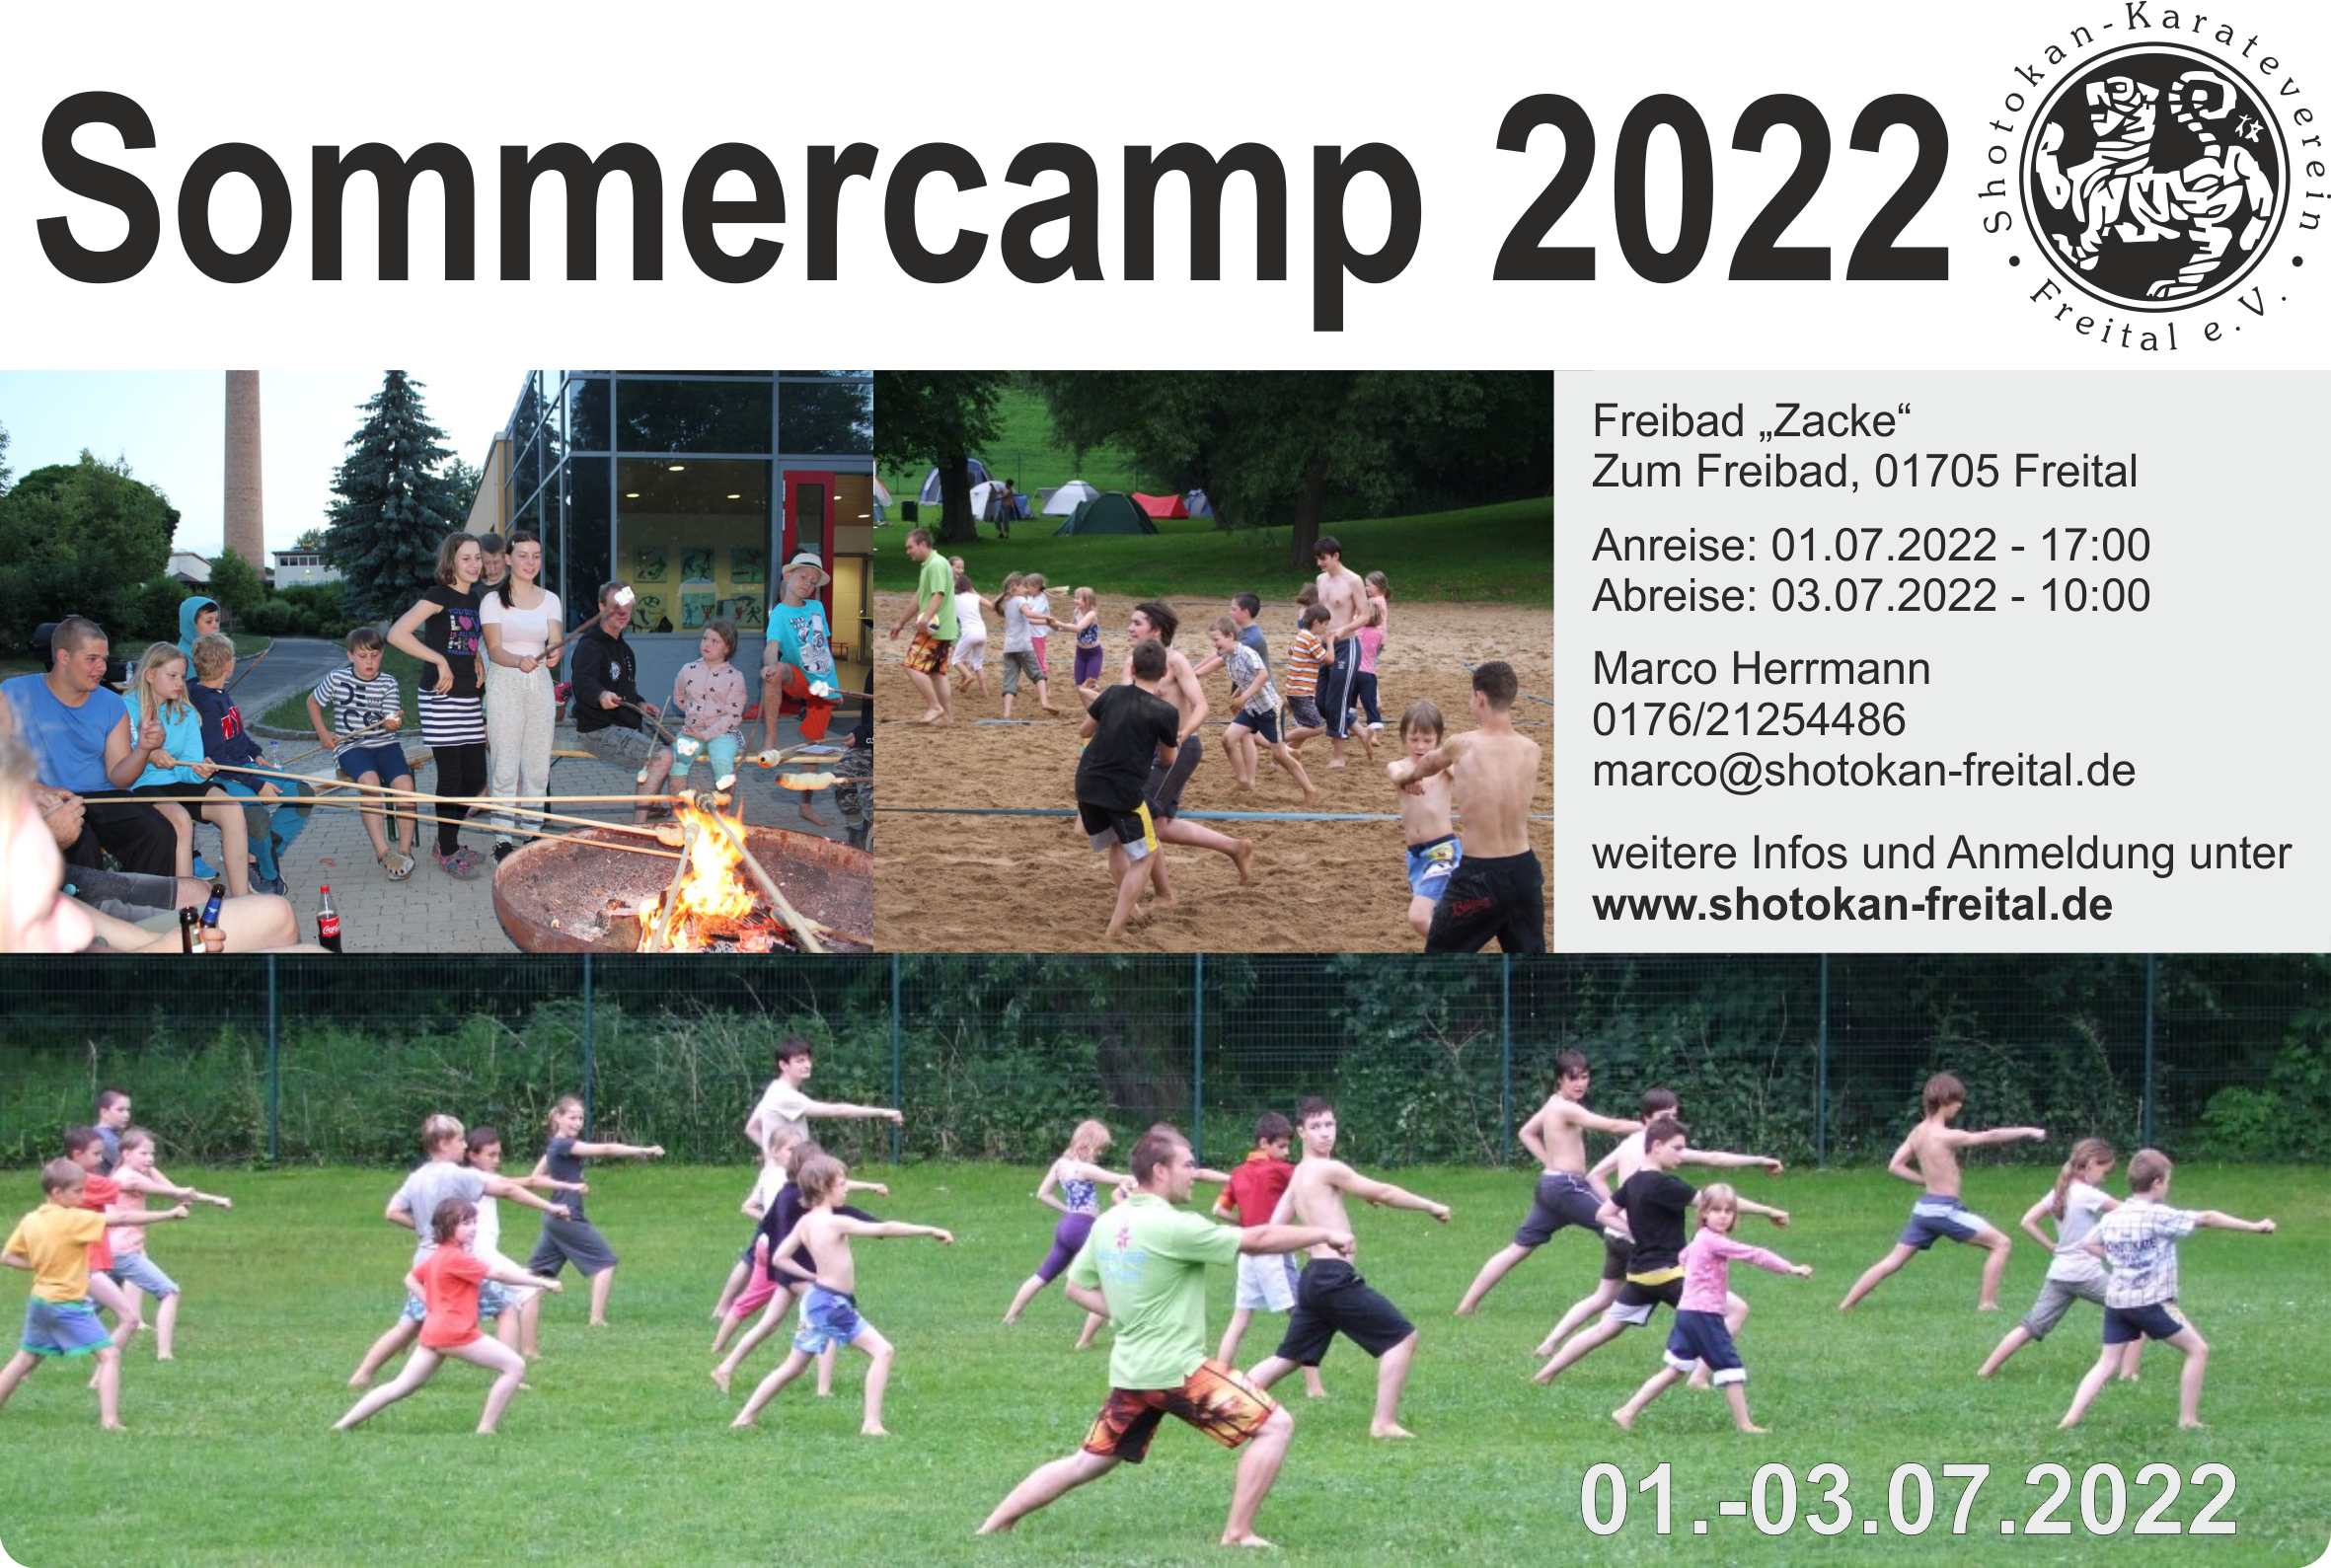 Sommercamp in Freital